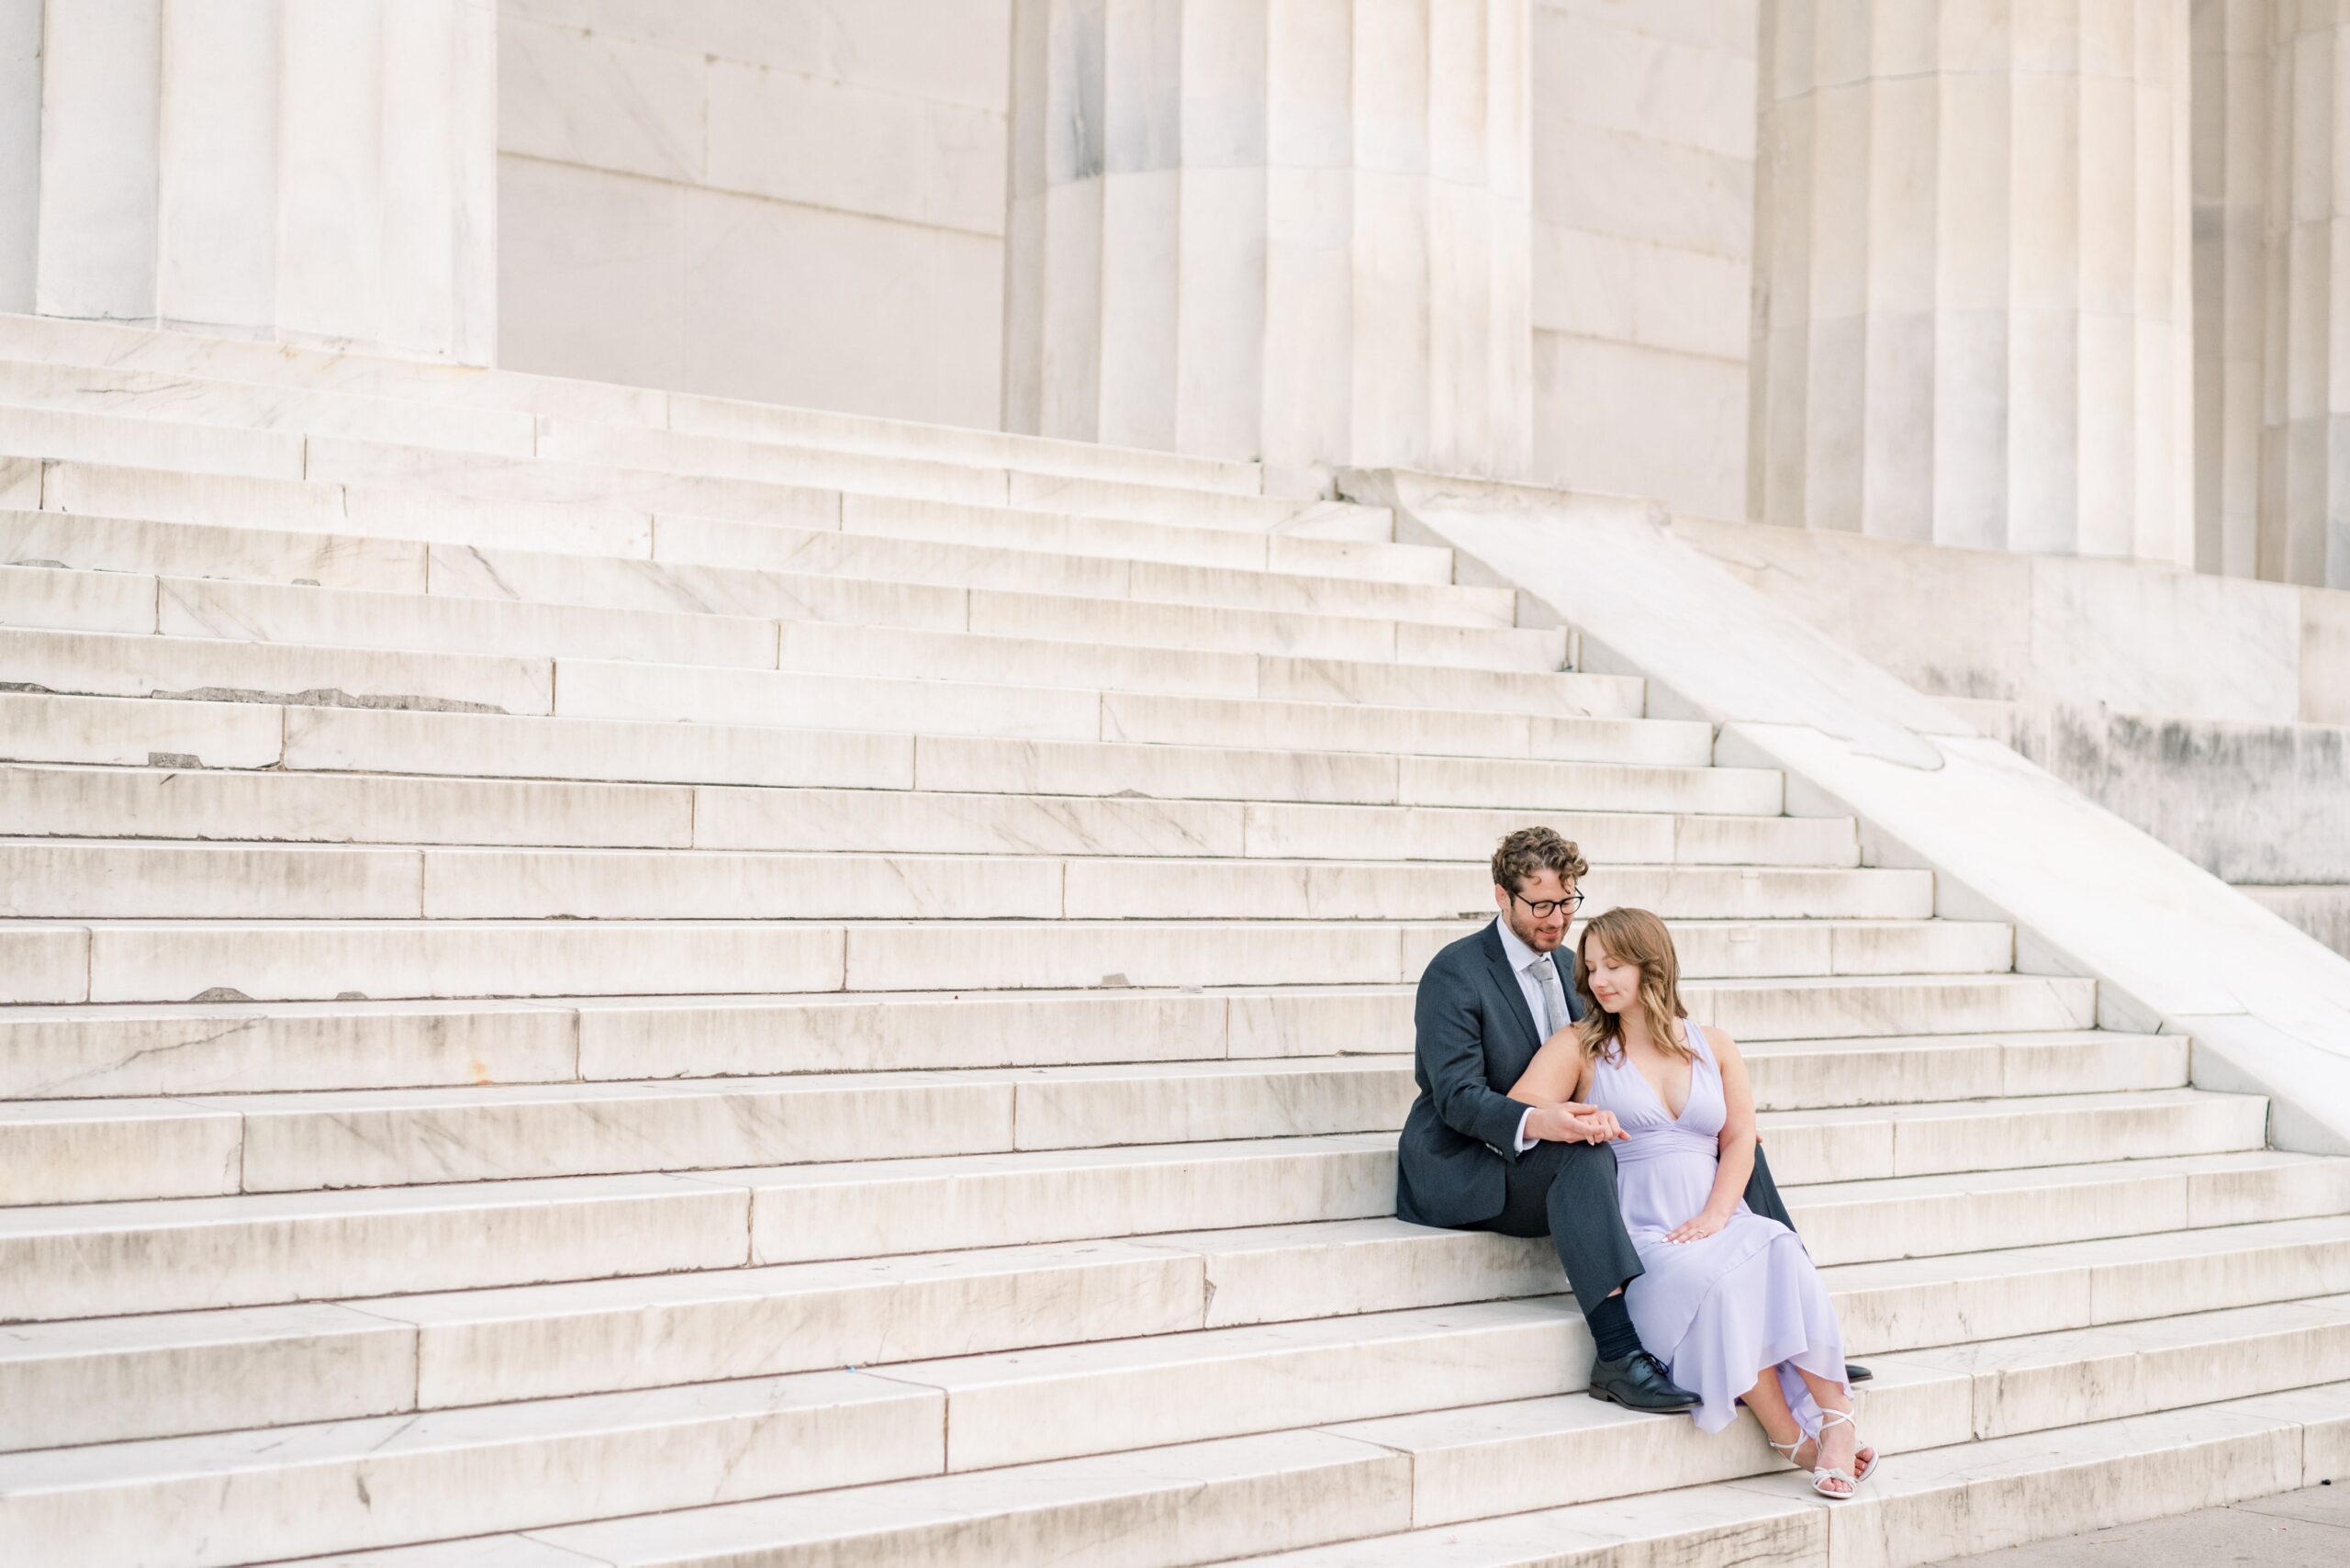 Hazy Lincoln Memorial engagement photos in Washington, DC.